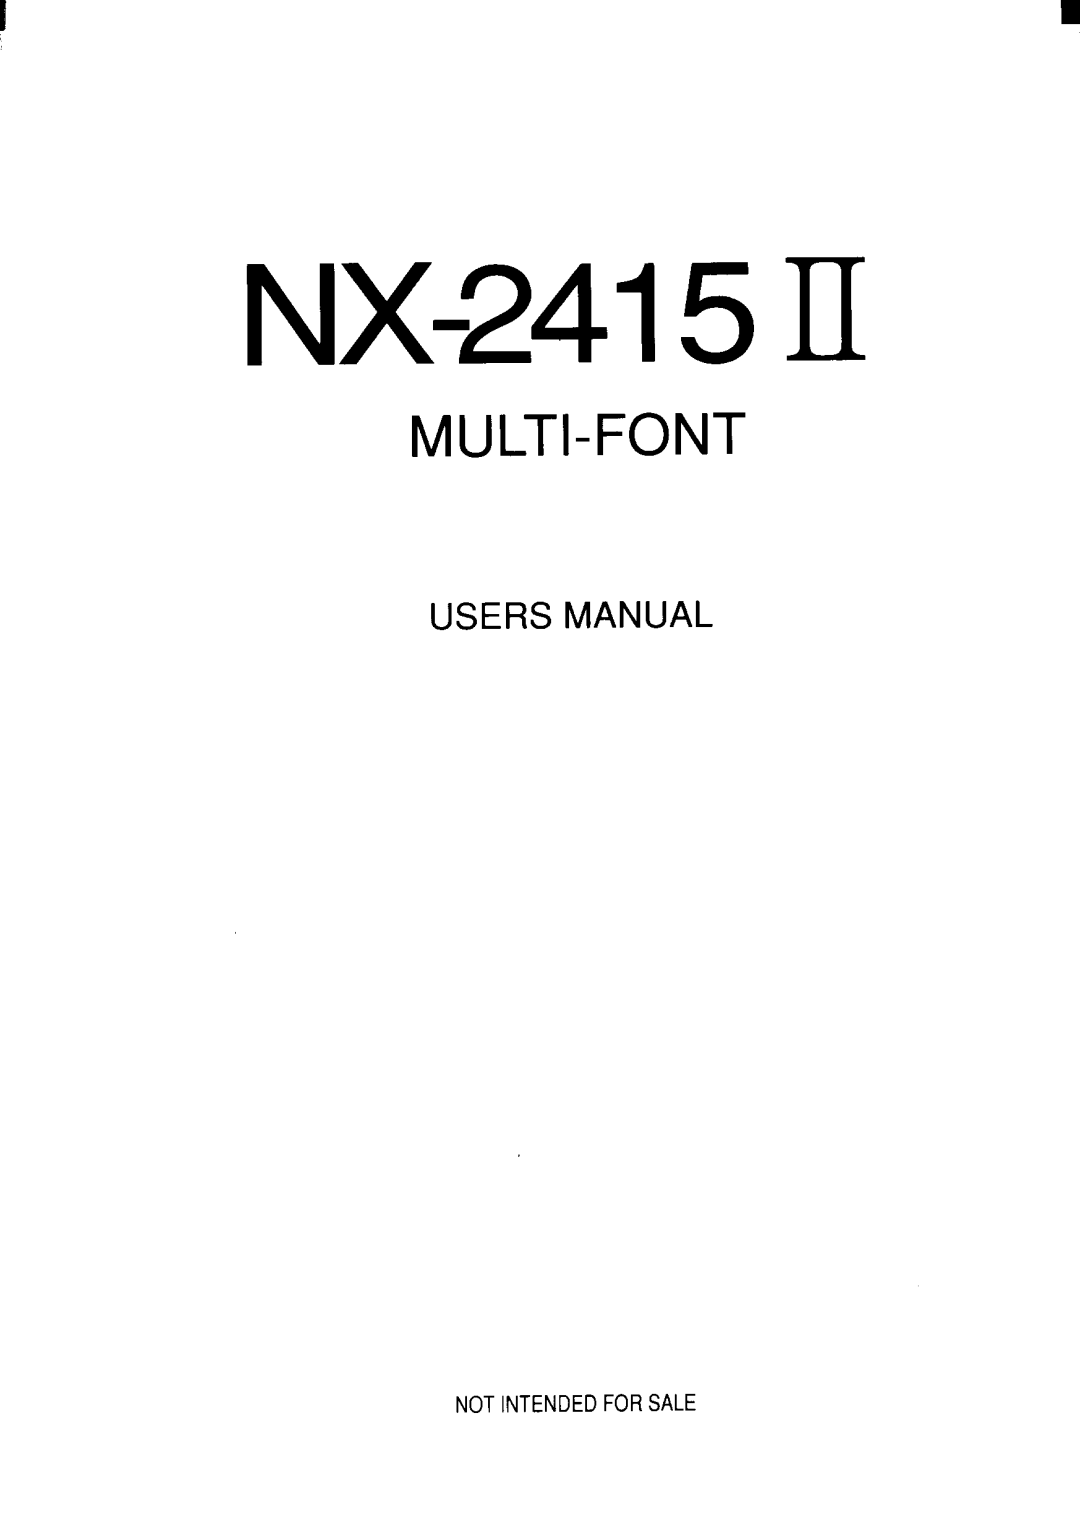 Star Micronics NX-2415II user manual Users Manual, Multi-Font 